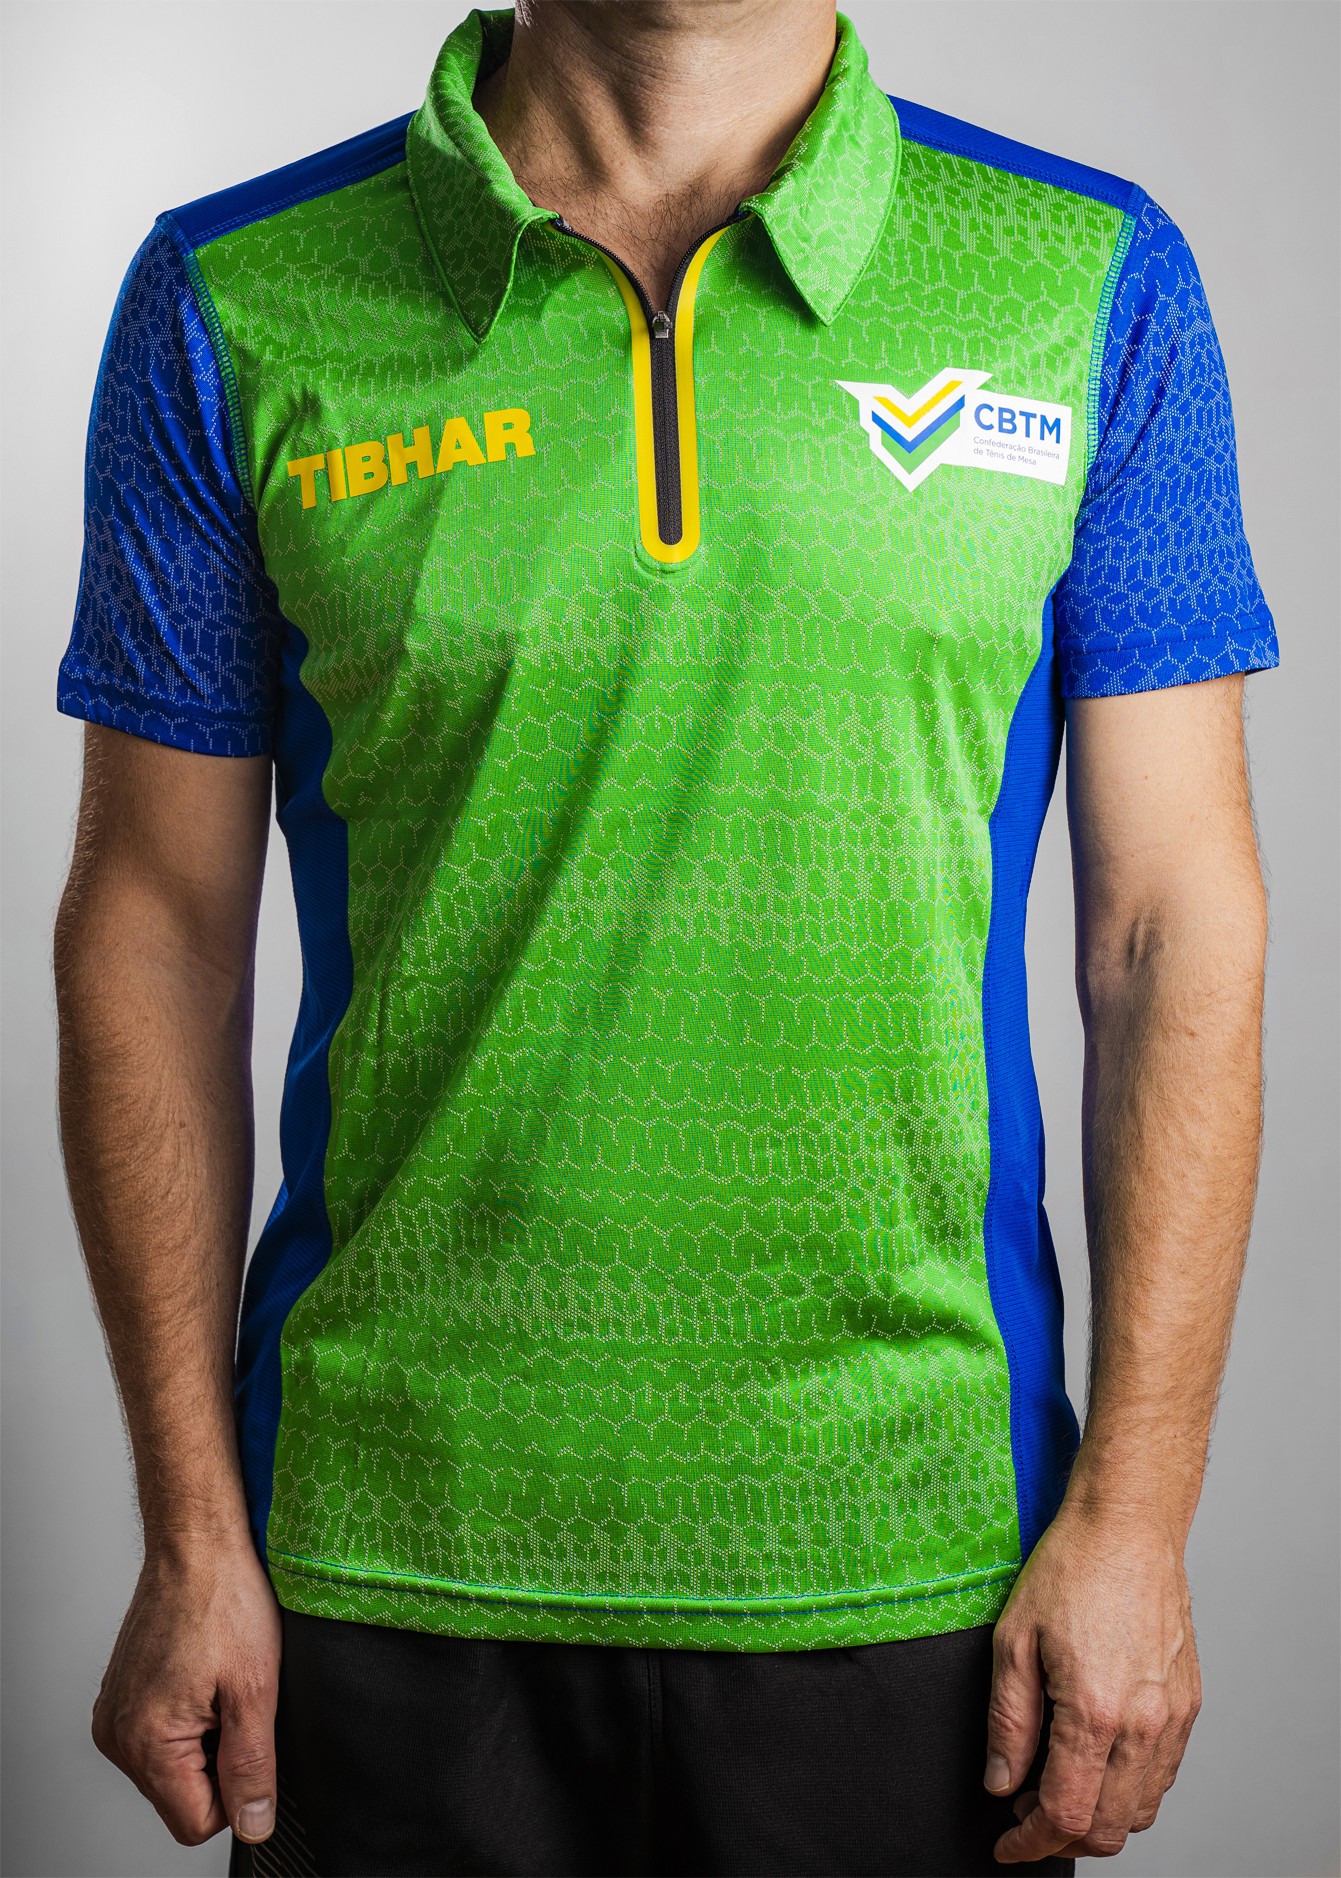 green brazil jersey